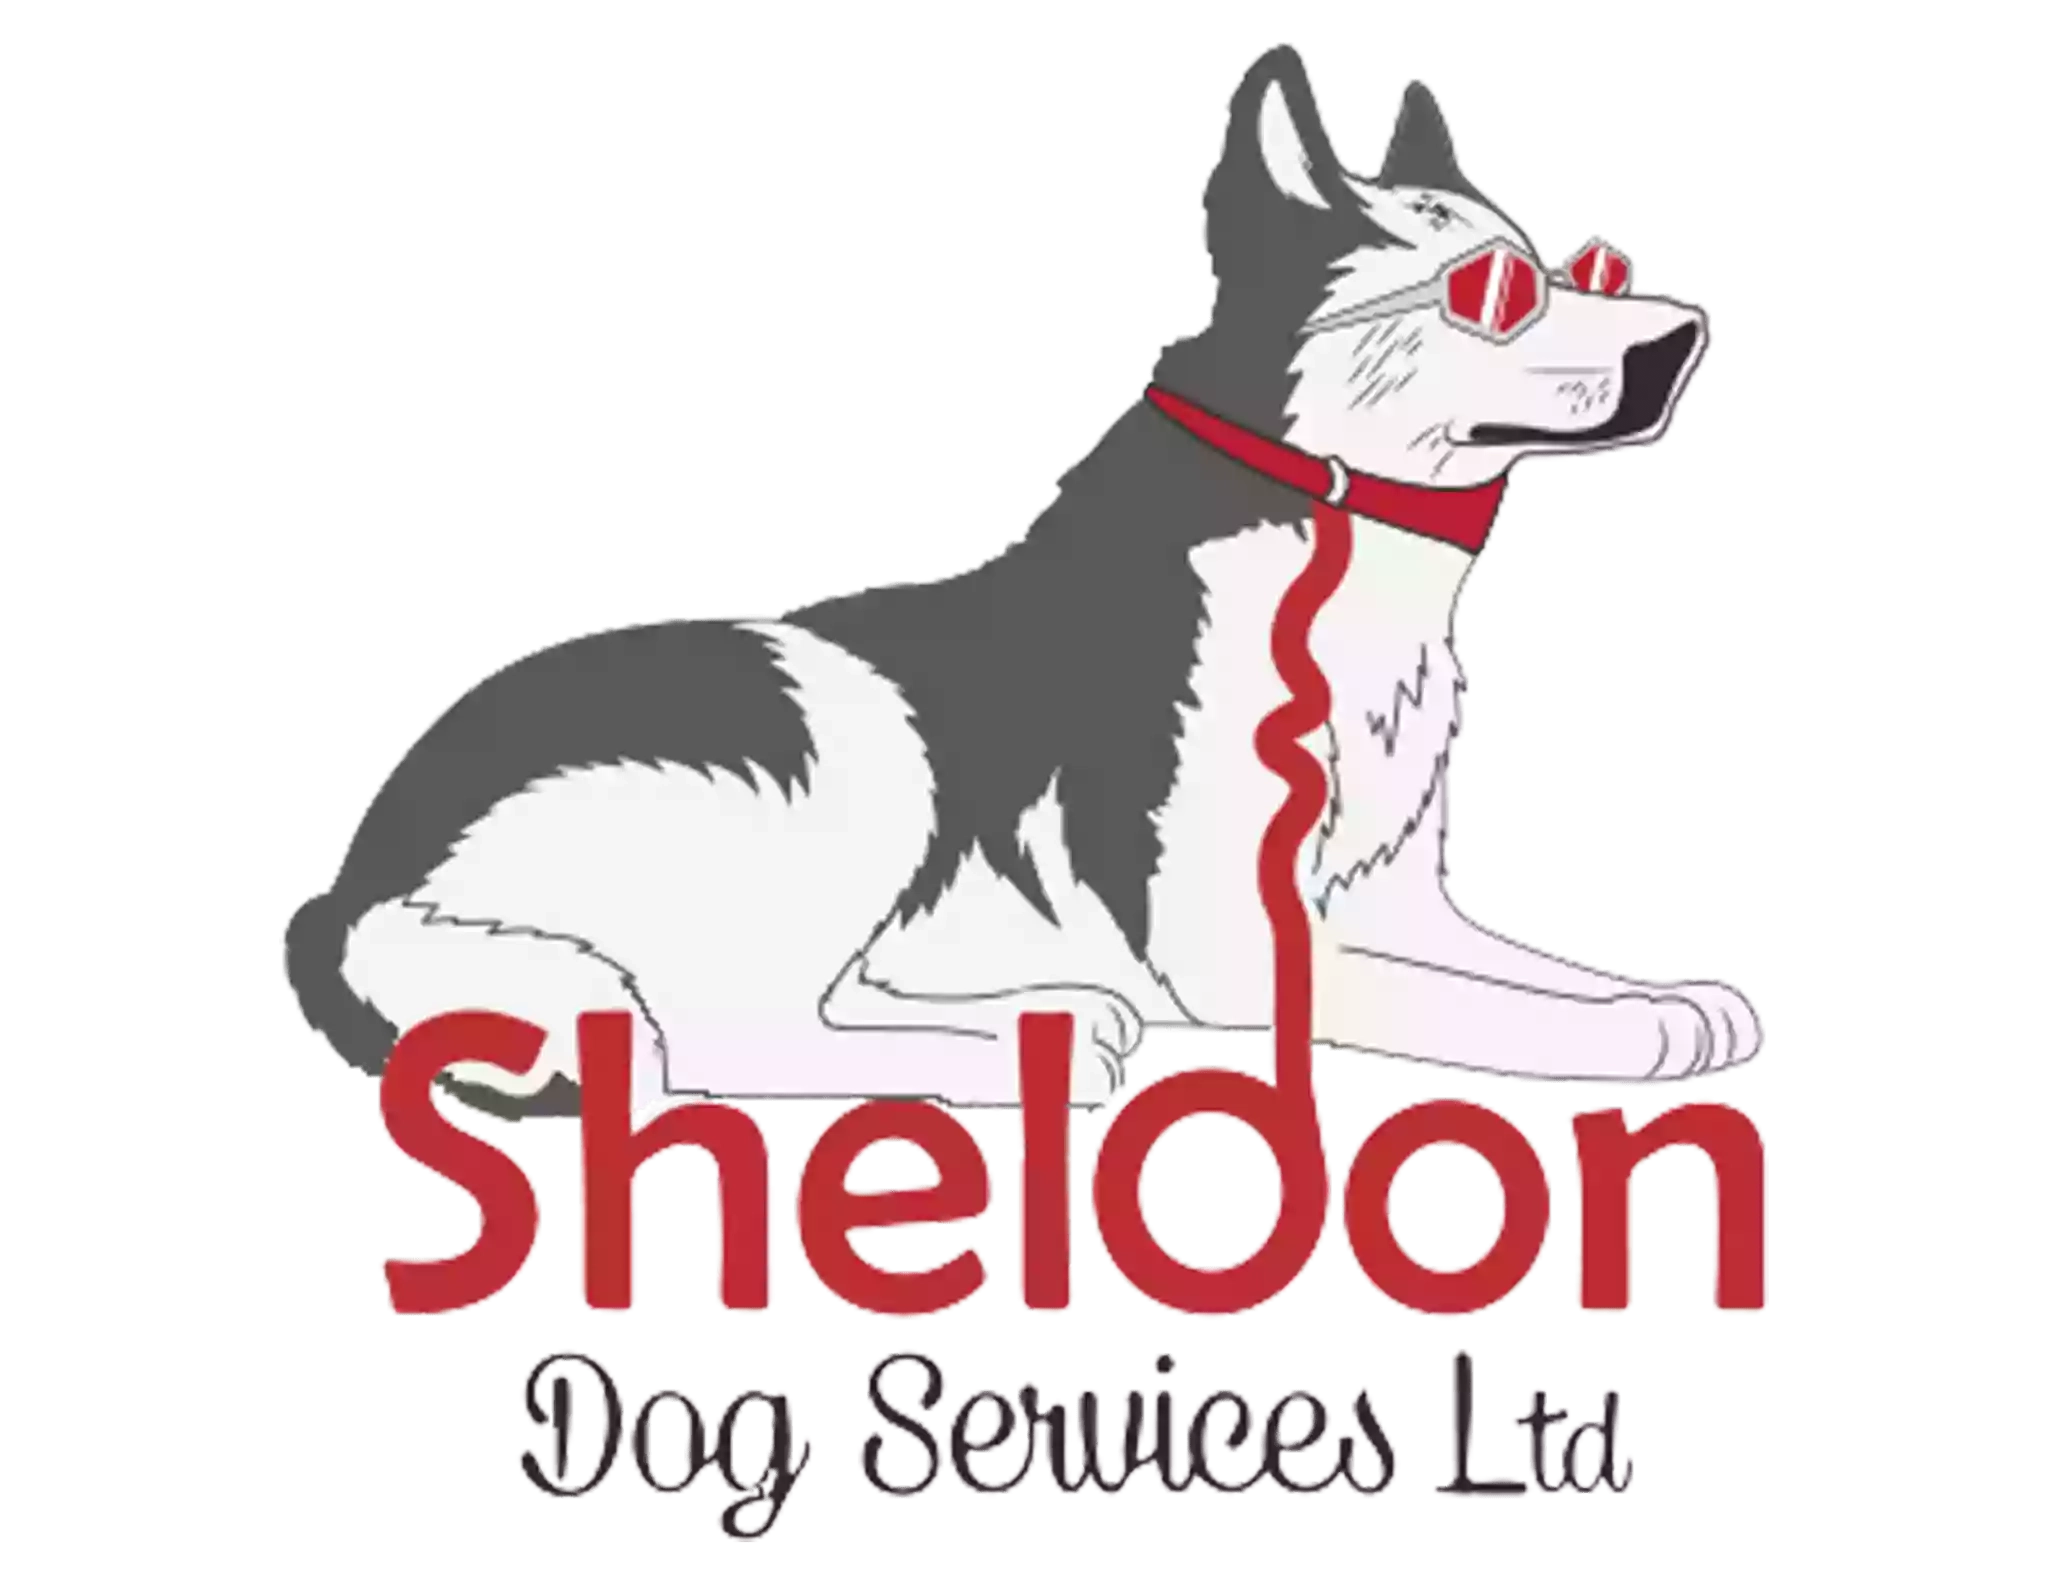 Sheldon Dog Services Ltd